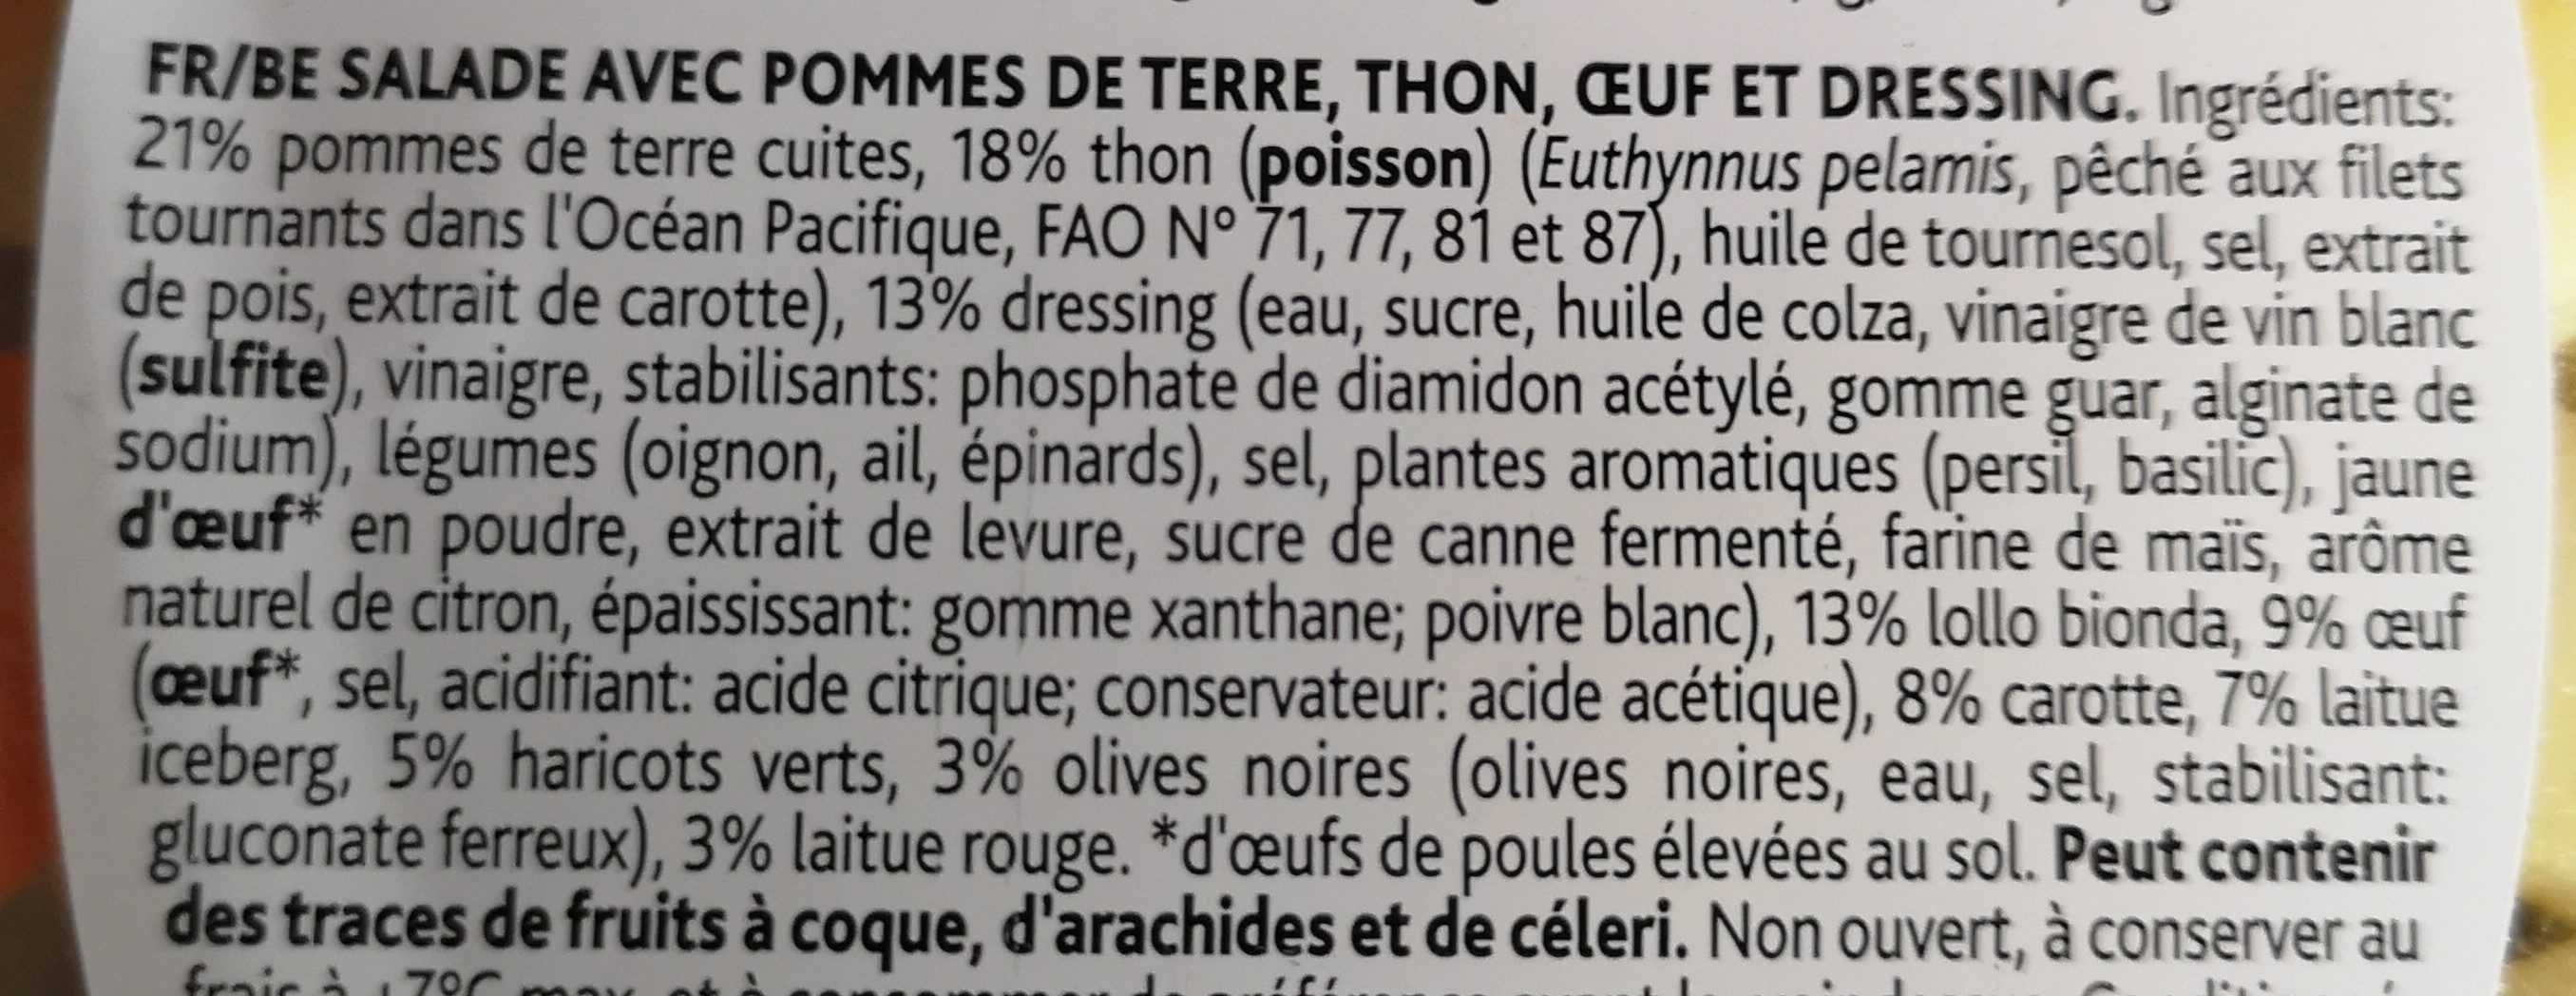 Salade repas thon - Ingrédients